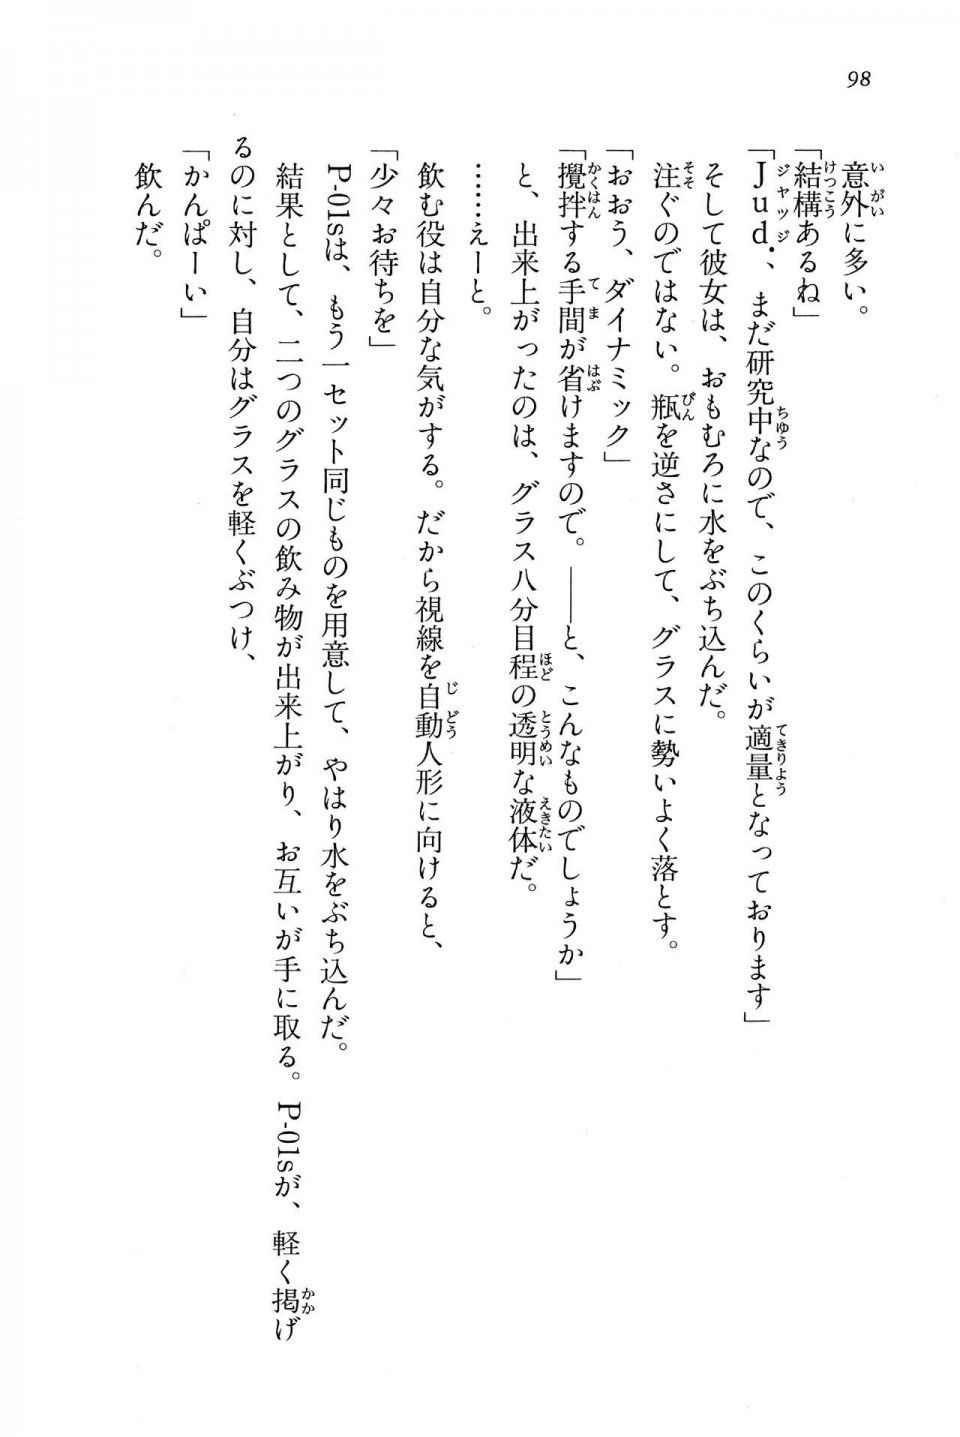 Kyoukai Senjou no Horizon BD Special Mininovel Vol 6(3B) - Photo #102